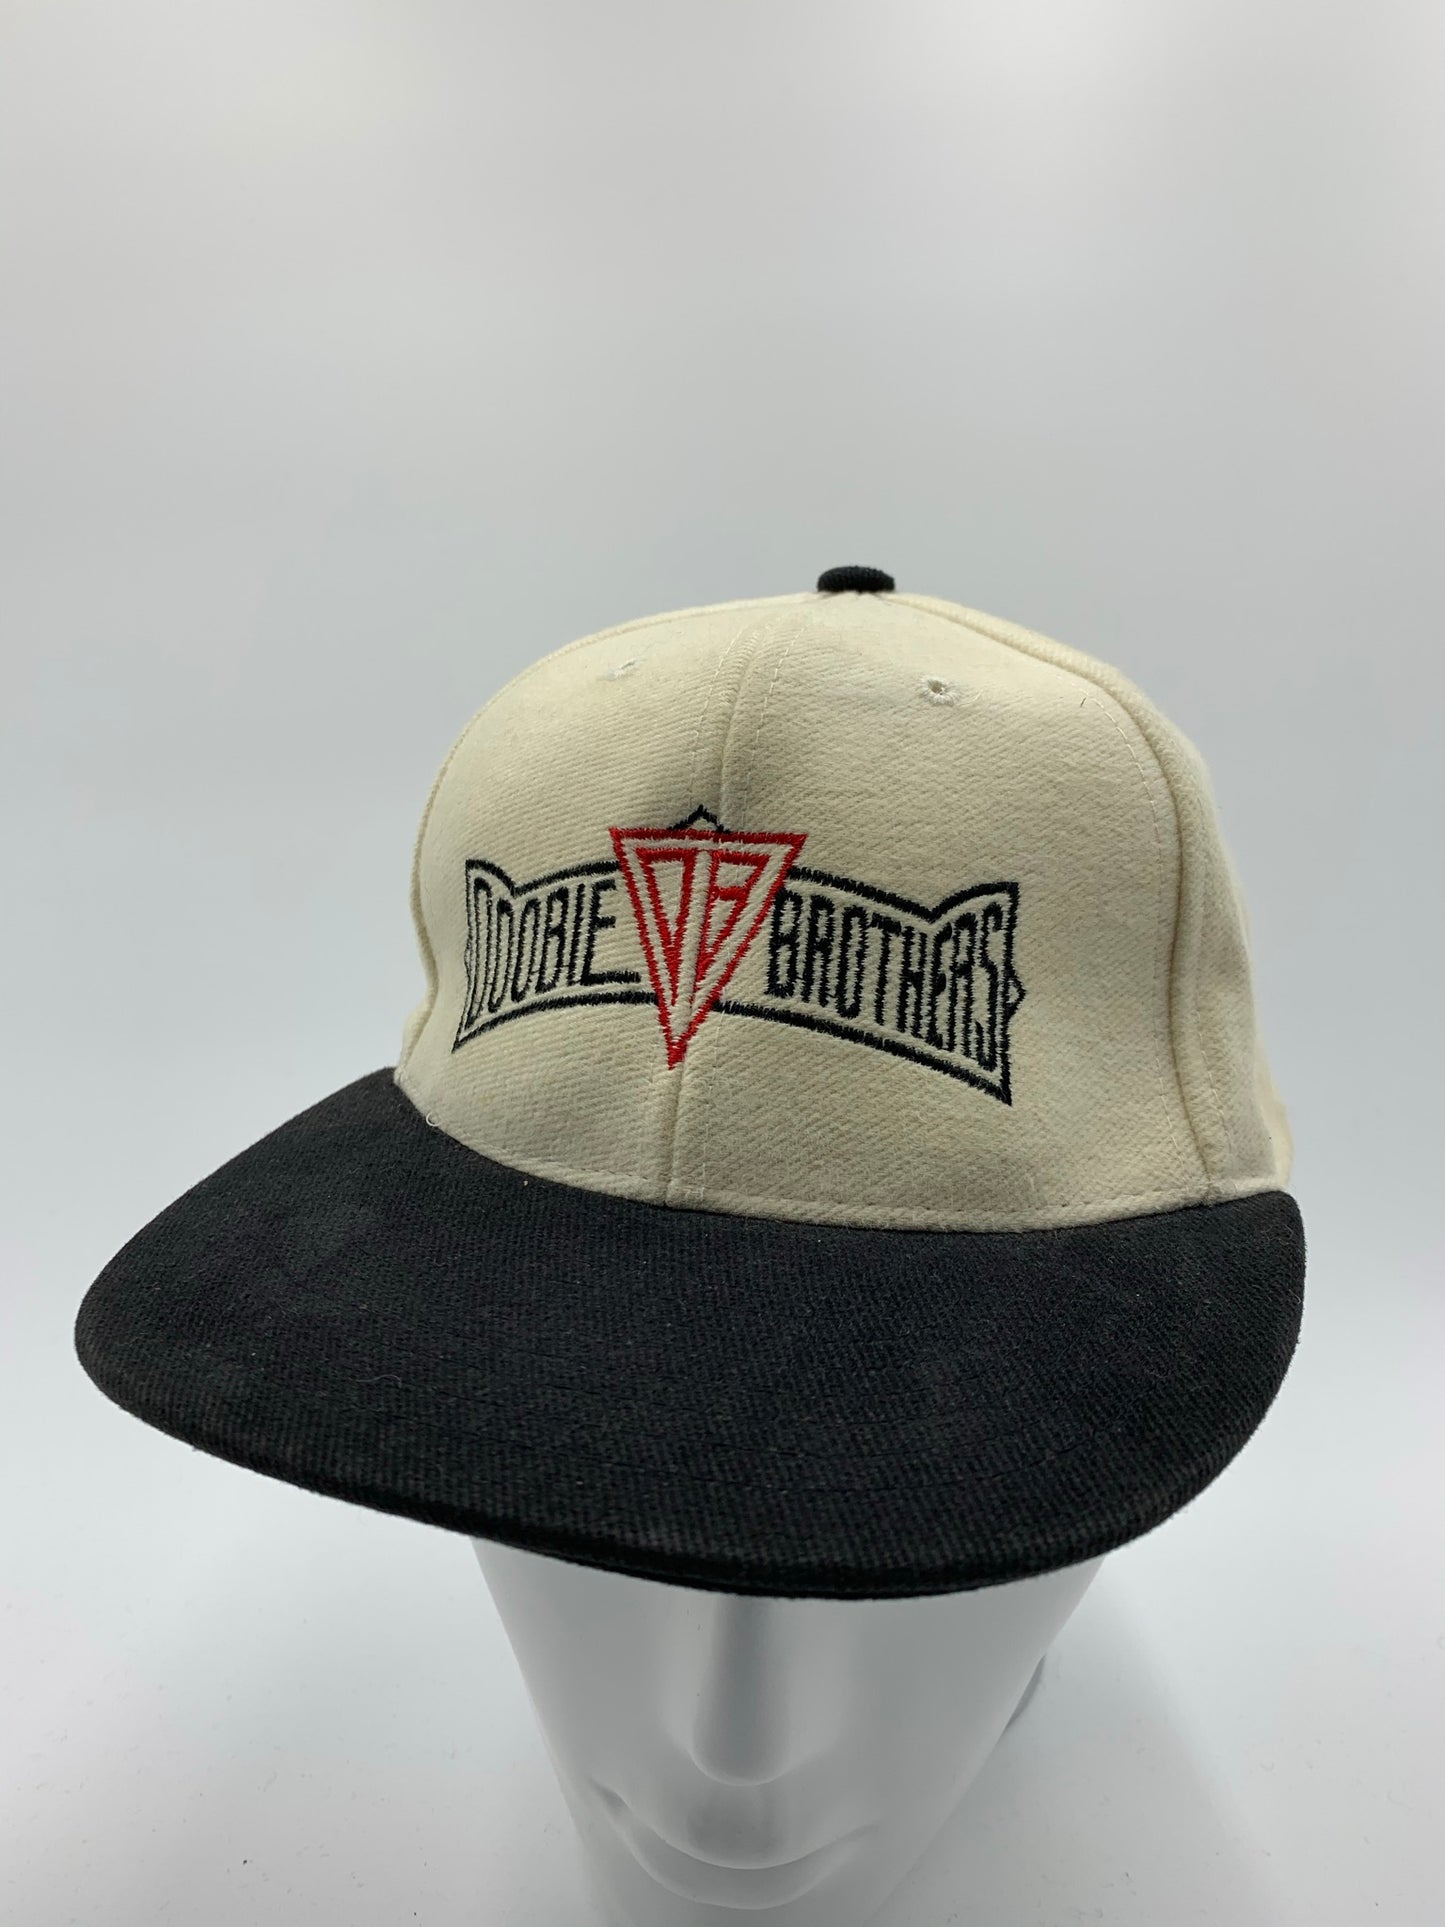 Doobie Brothers Vintage Hat